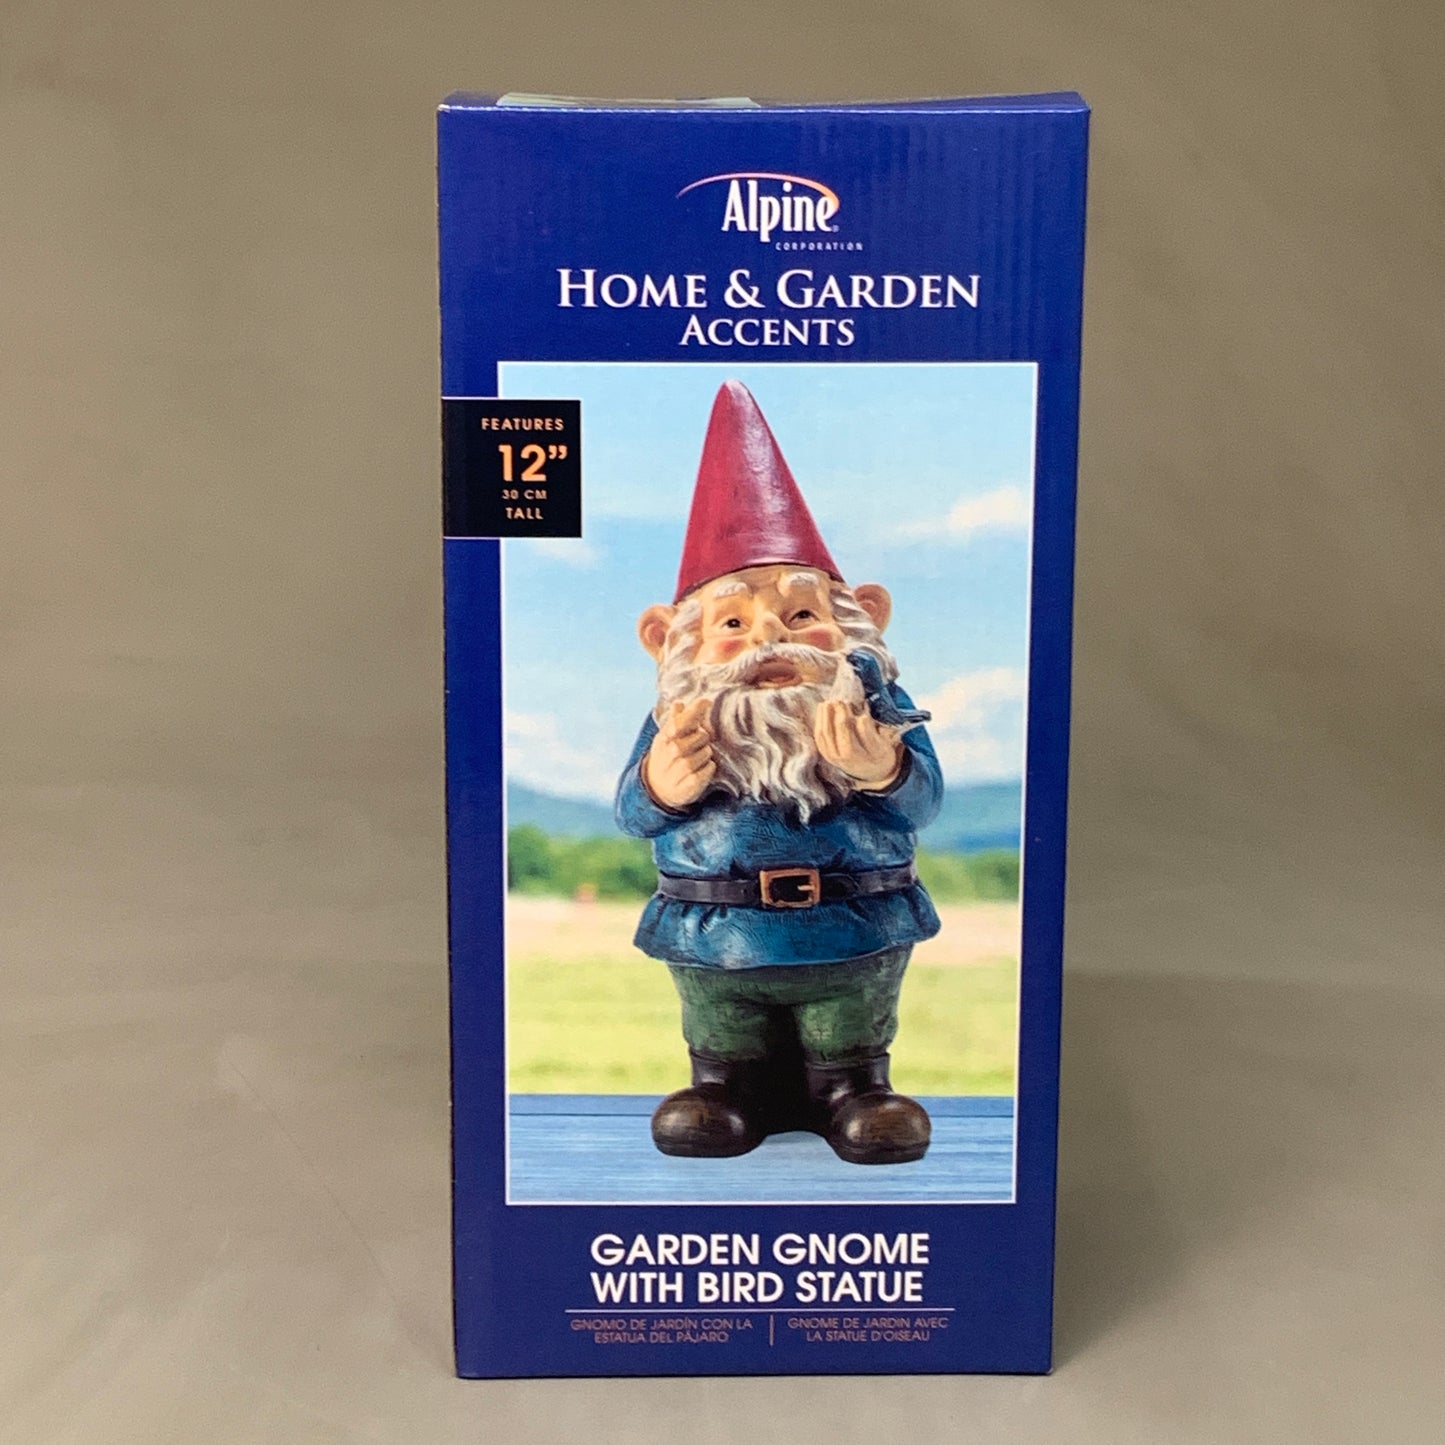 ALPINE Garden Gnome Holding Bird Home & Garden Accents WAC406 (New)